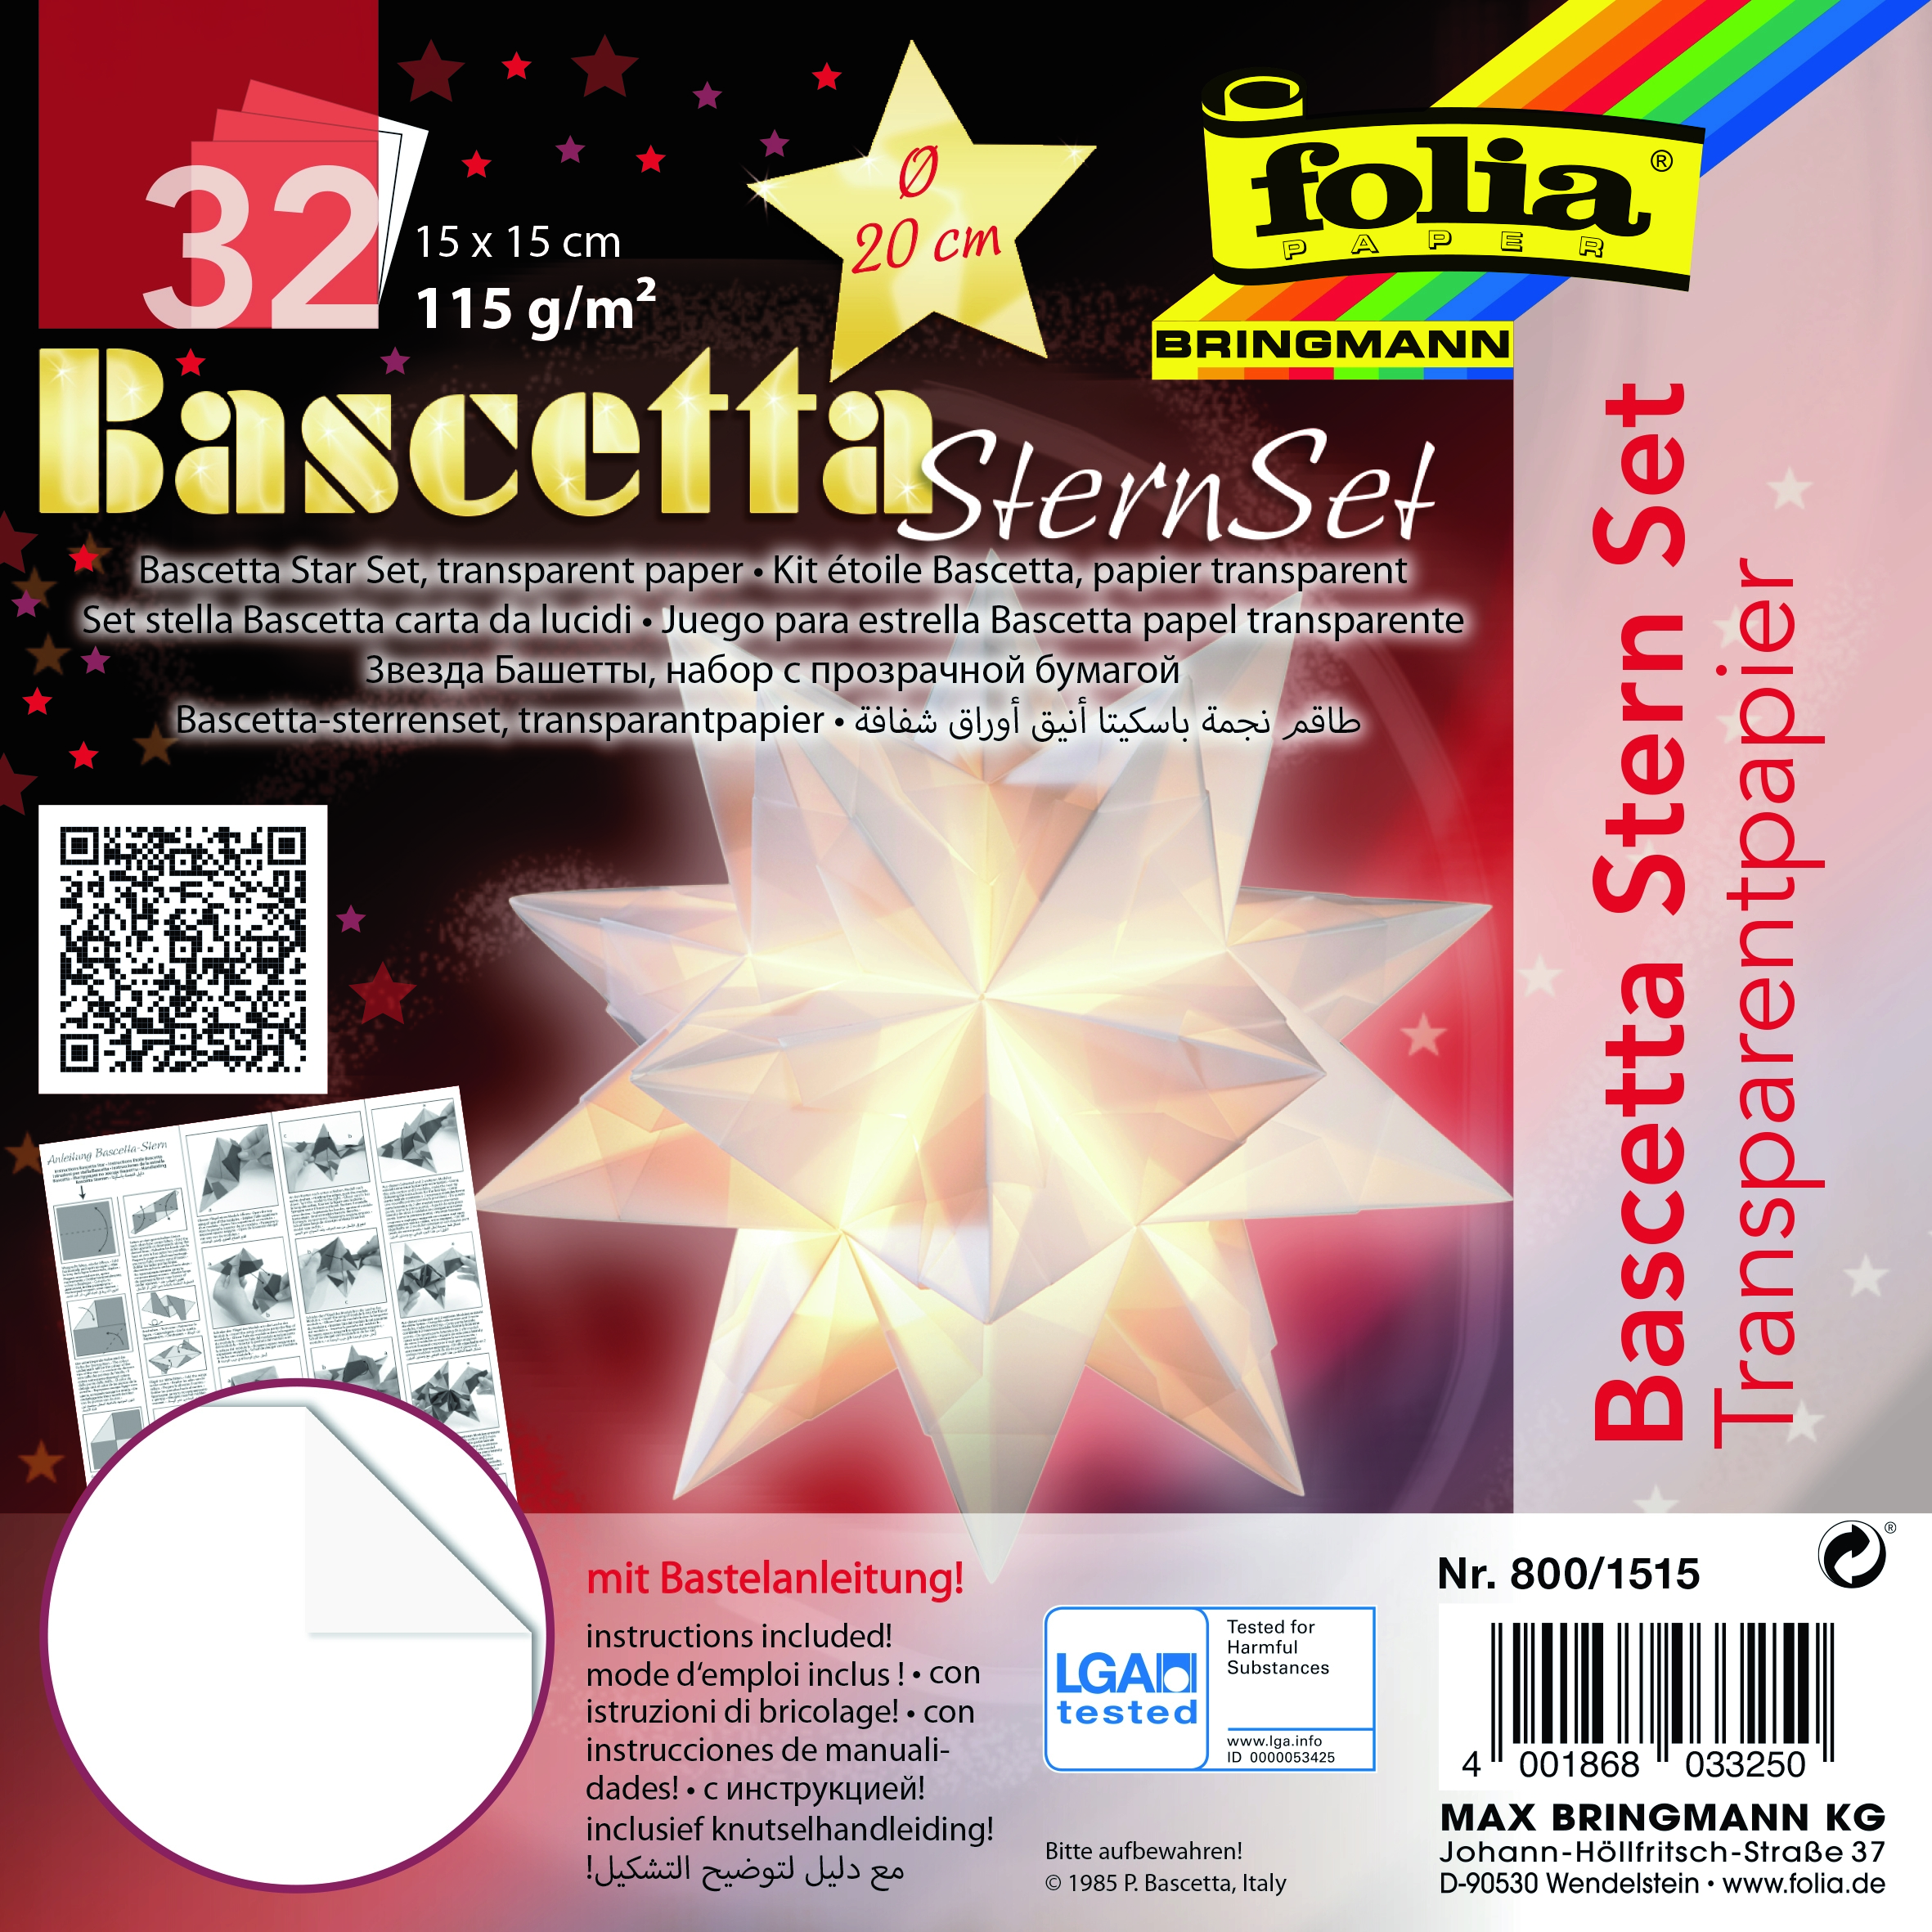 Bascetta-Stern Set "Transparentpapier" weiß